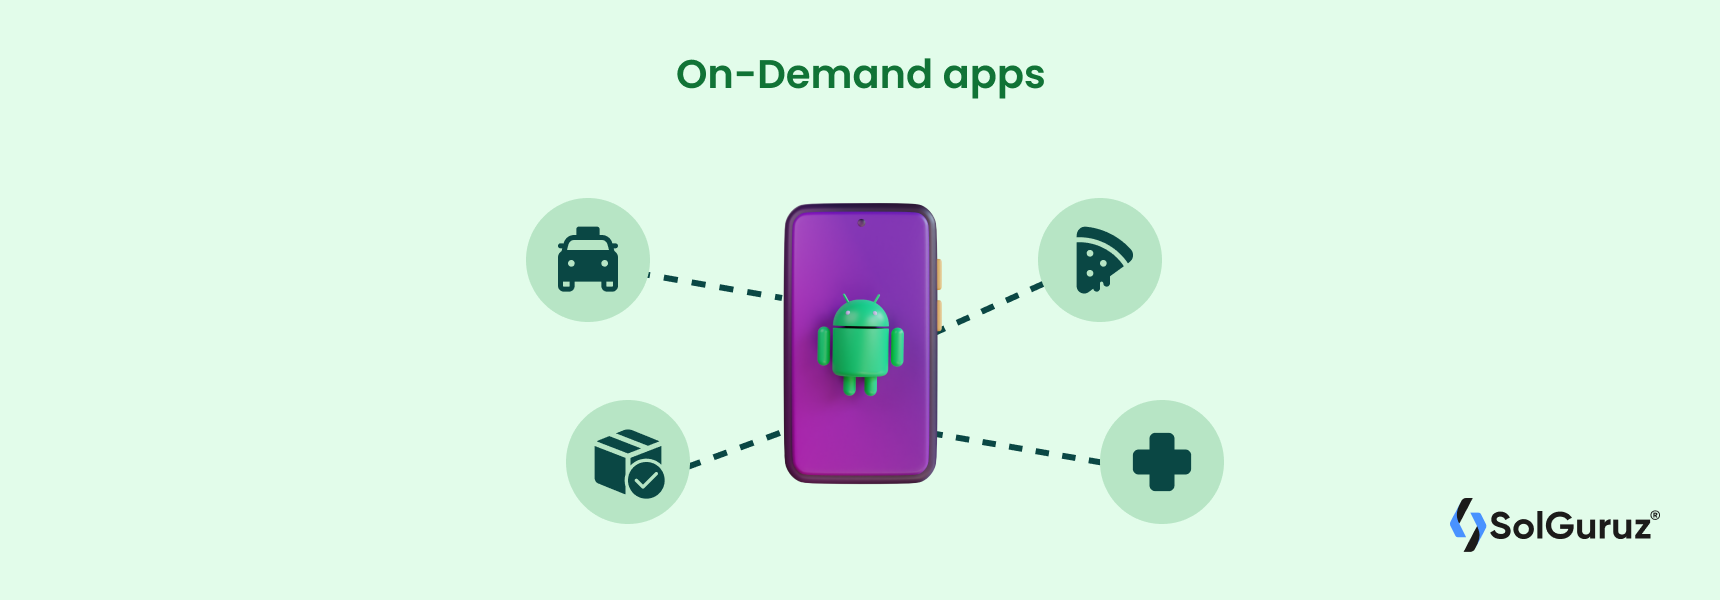 On-Demand apps development